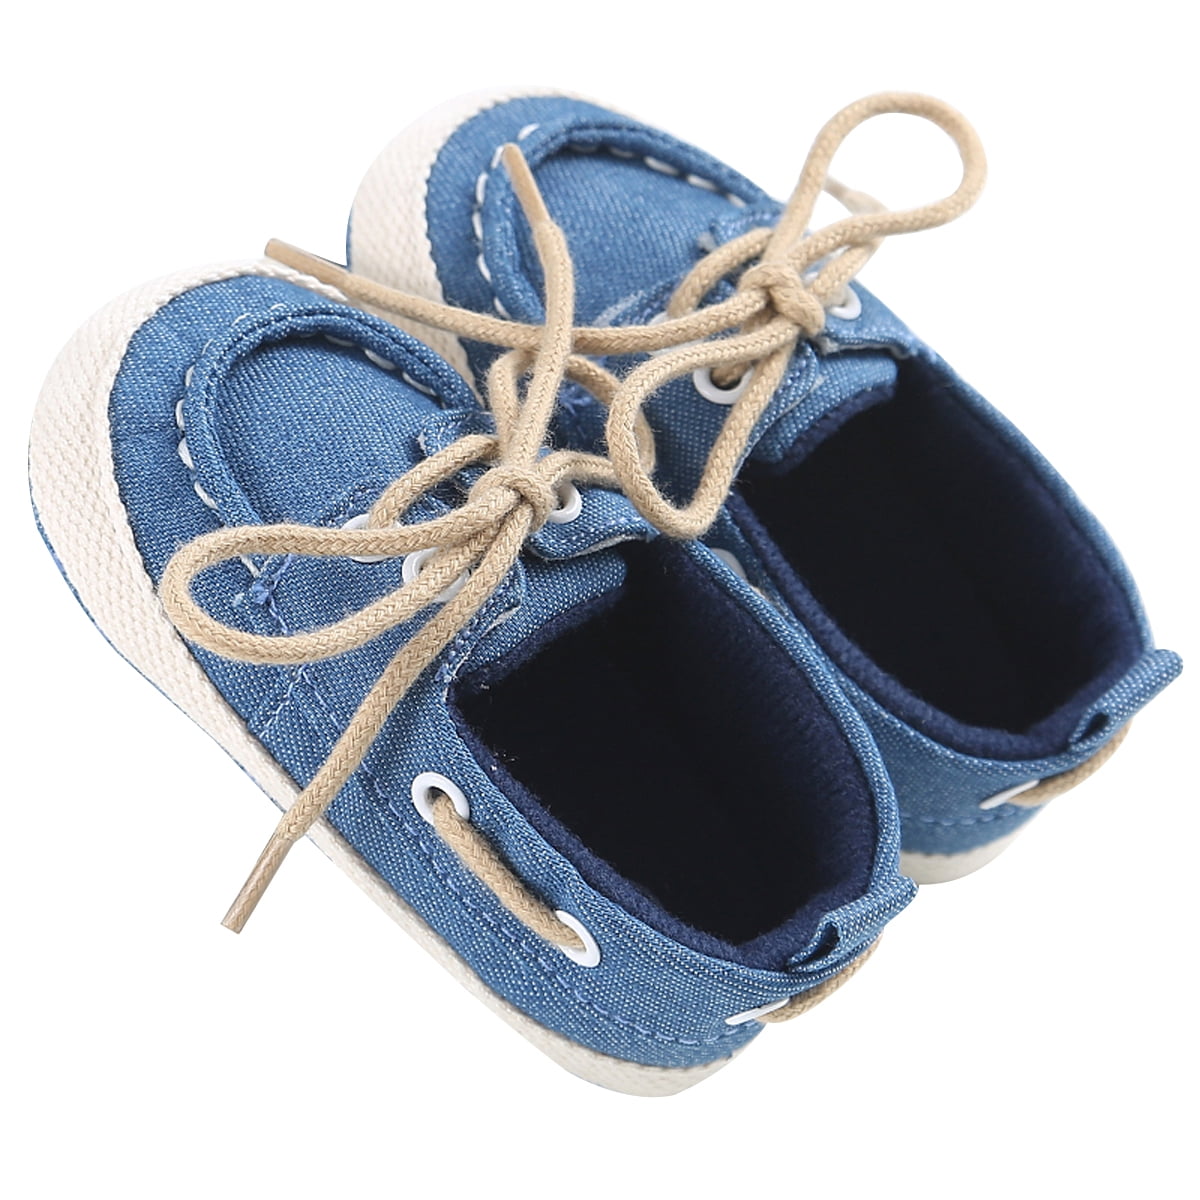 Hot Baby Newborn Girl Boy Denim Soft Sole Toddler Infant Shoes Prewalker Anti-Slip Sneaker Shoes 